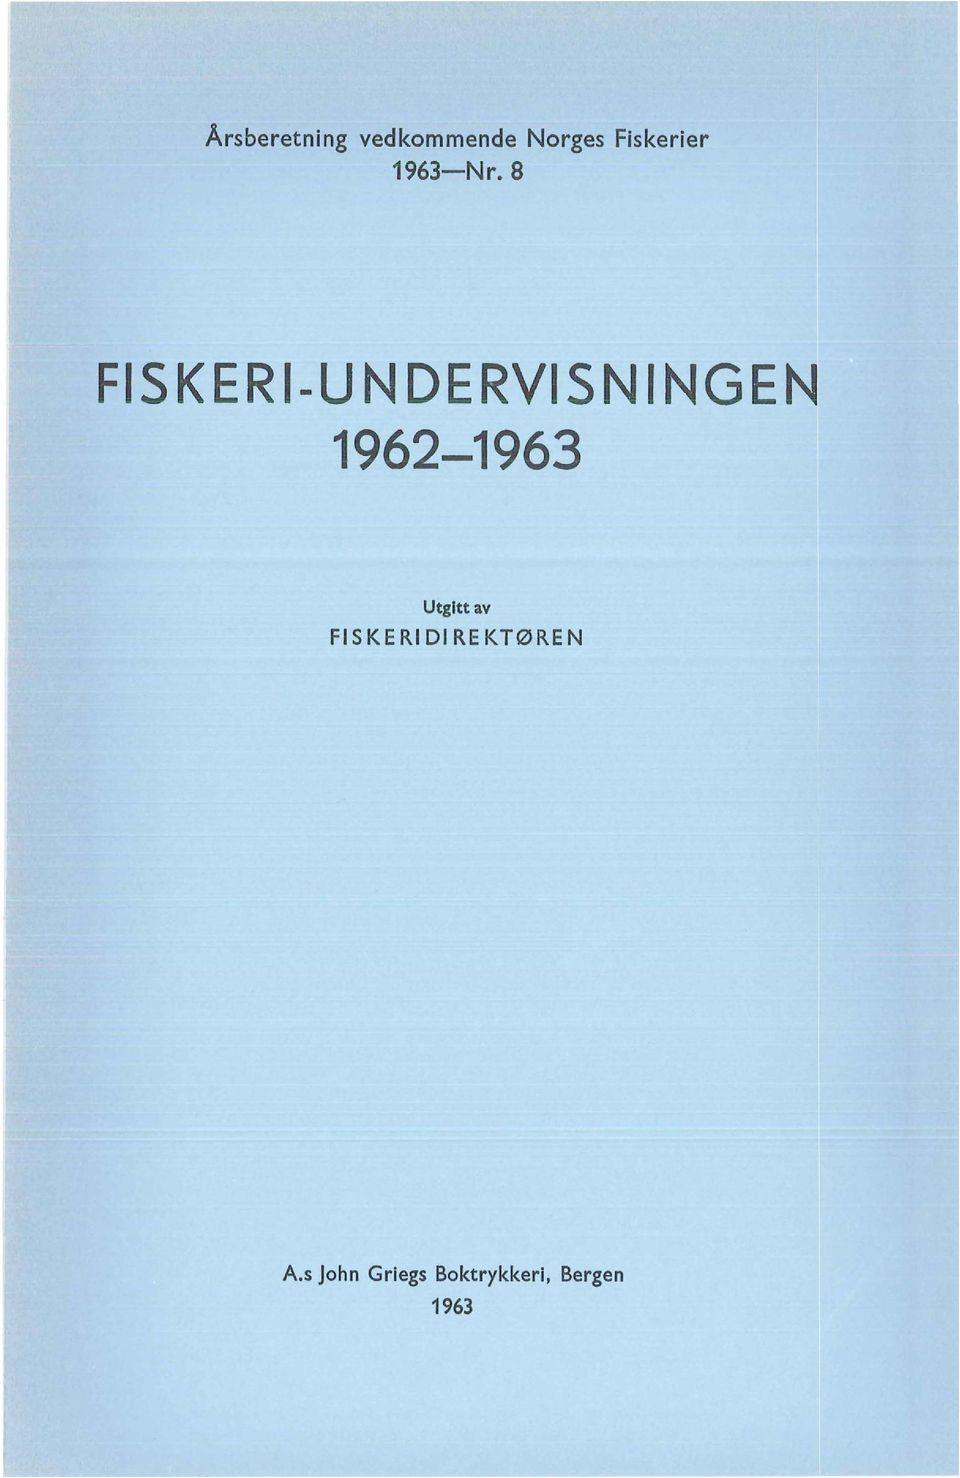 8 FISKERI-UN DERVISN NGEN 1962-1963